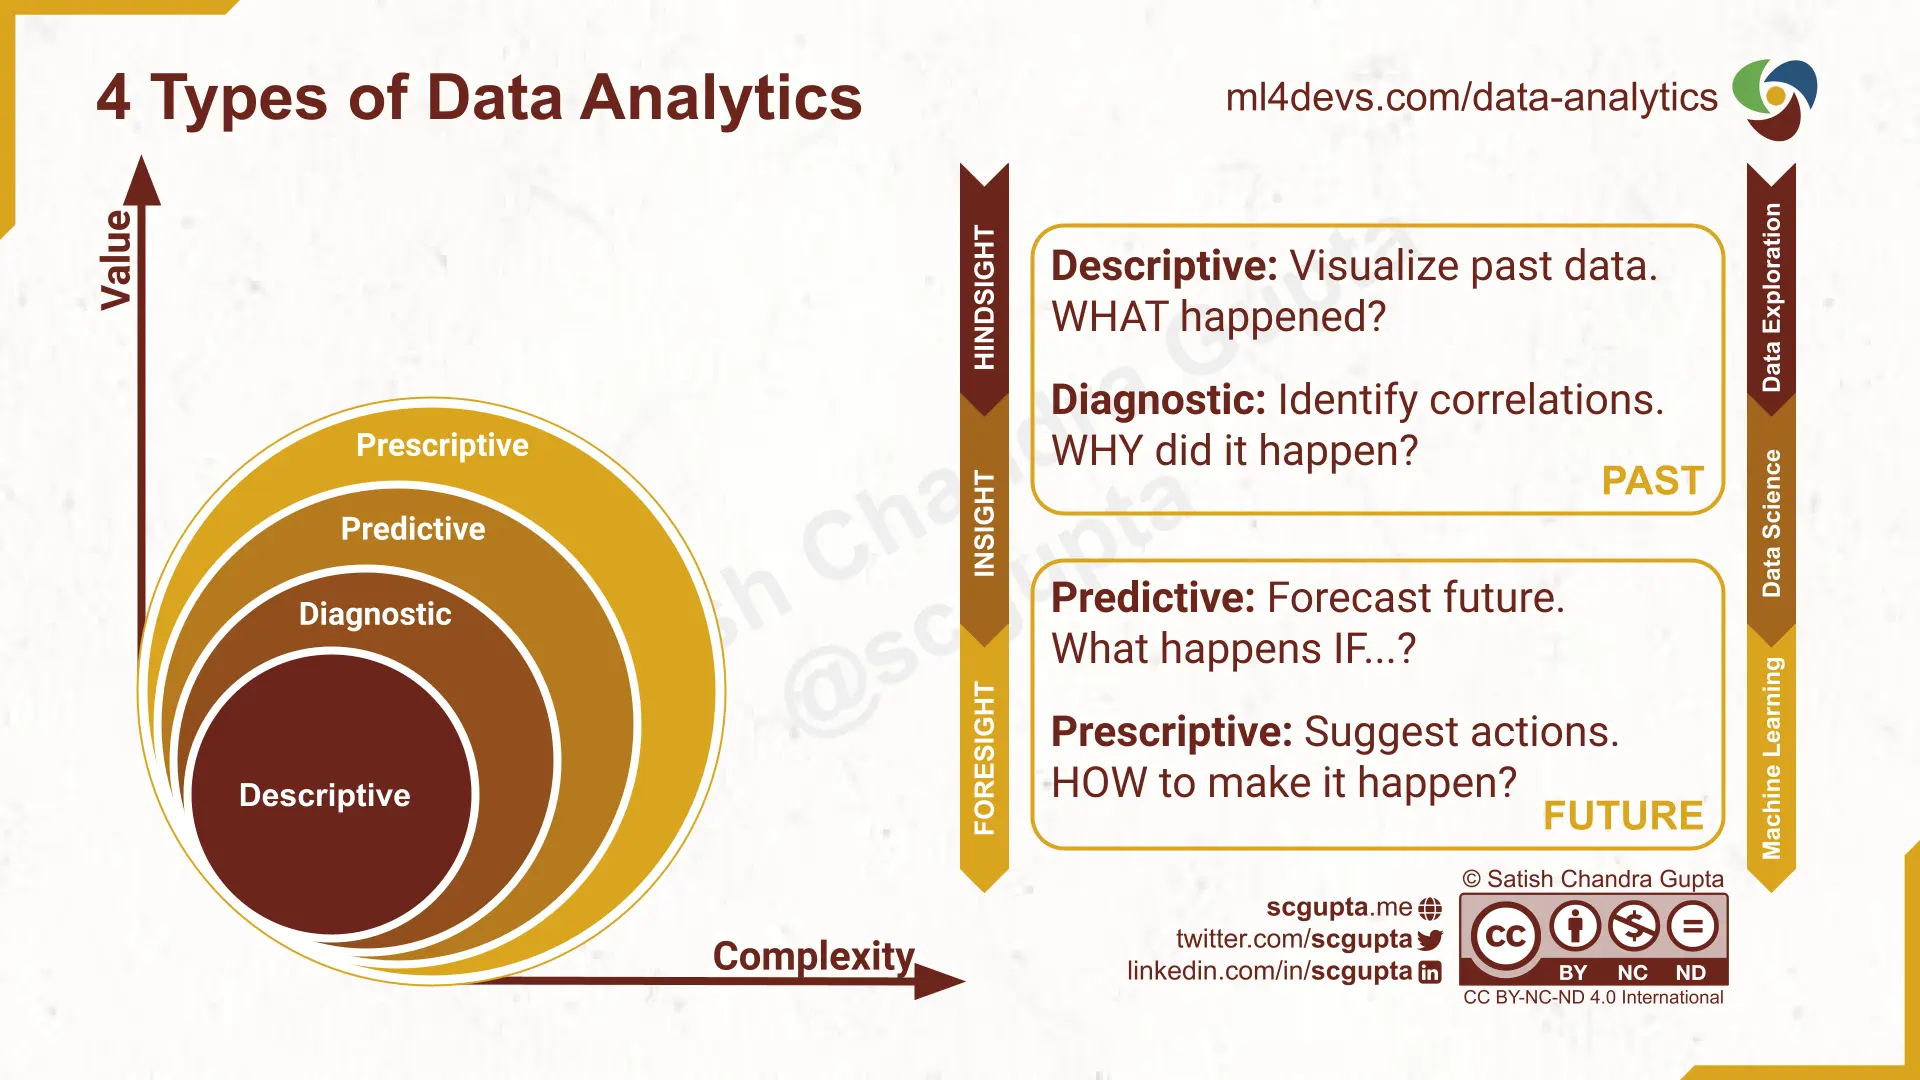 Four Types of Data Analytics: Descriptive, Diagnostic, Predictive, Prescriptive